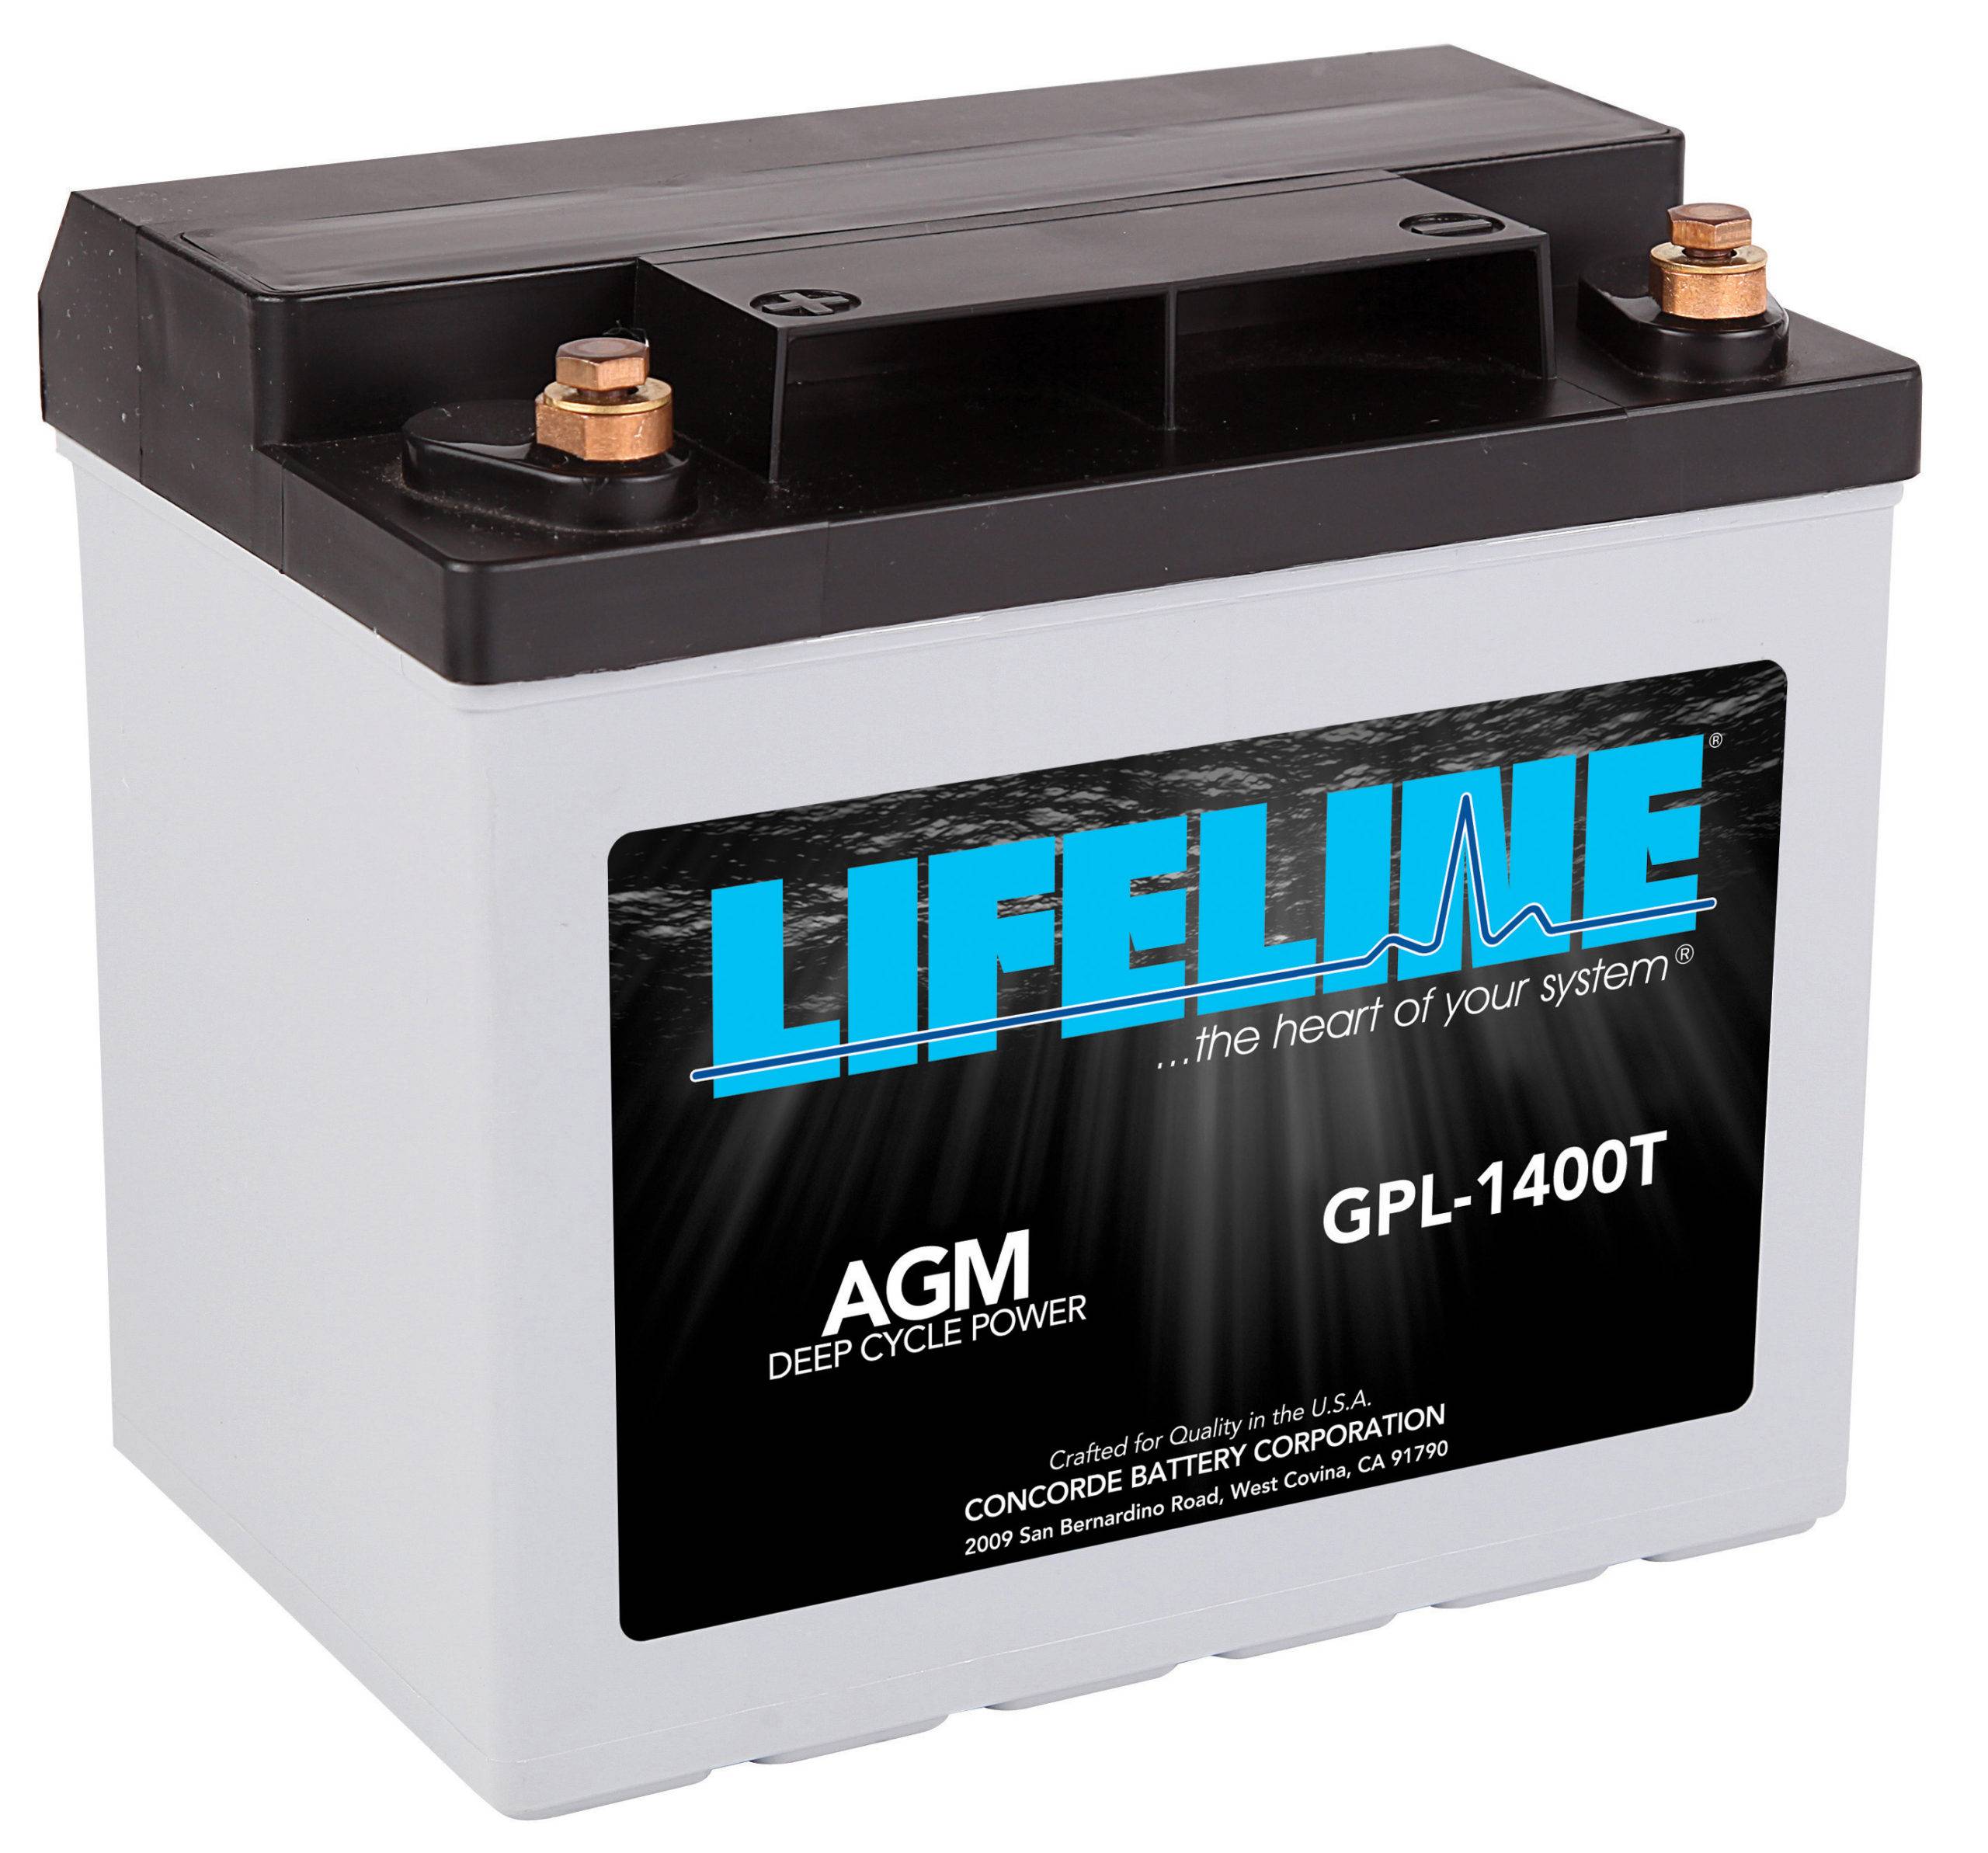 Lifeline GPL-1400T R HR Battery